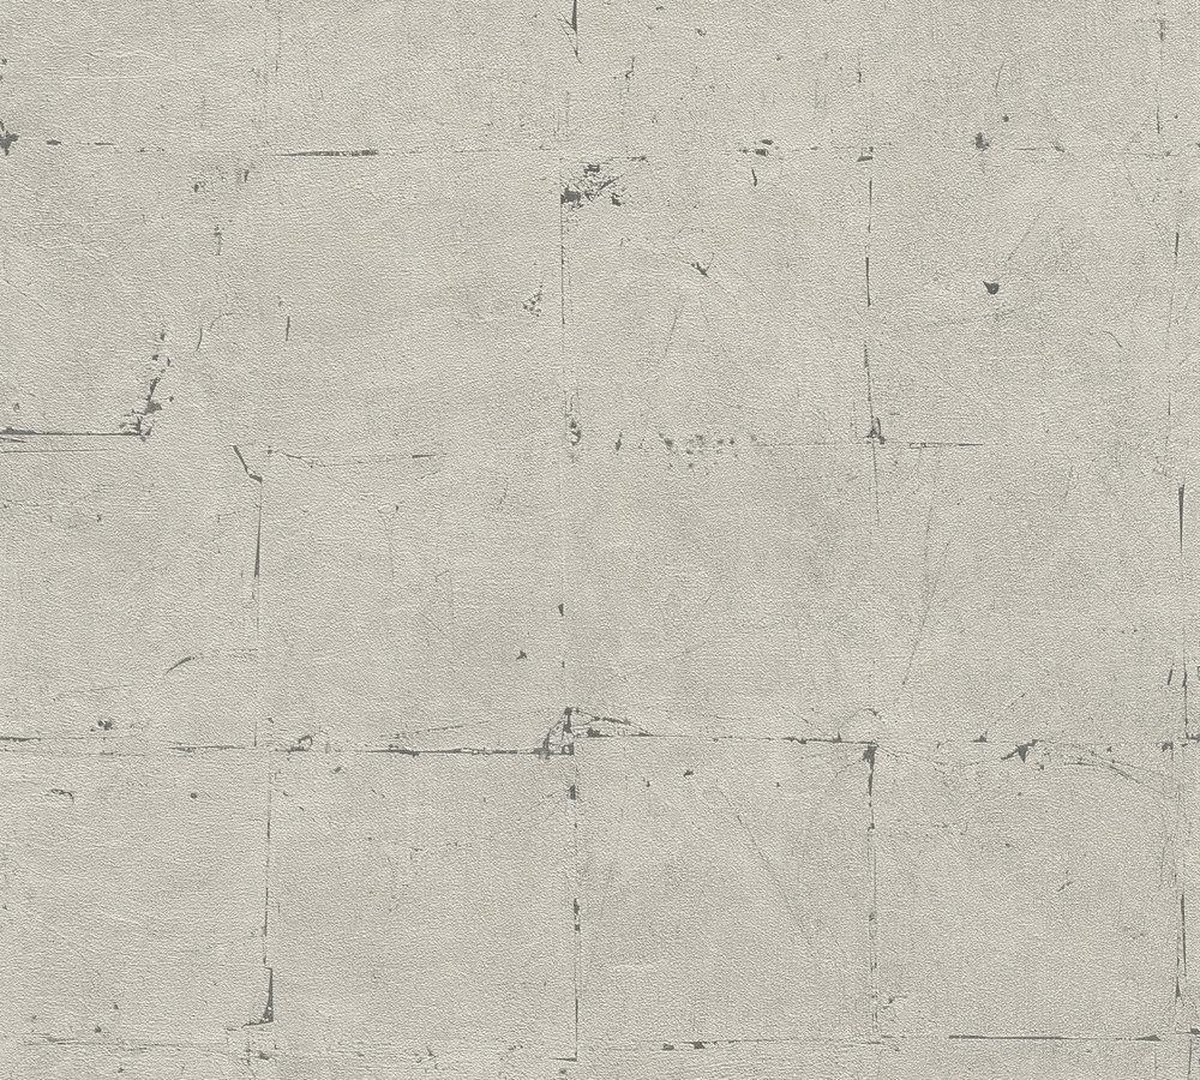 Steen tegel behang Profhome 939921-GU vliesbehang glad met natuur patroon mat grijs beige 5,33 m2